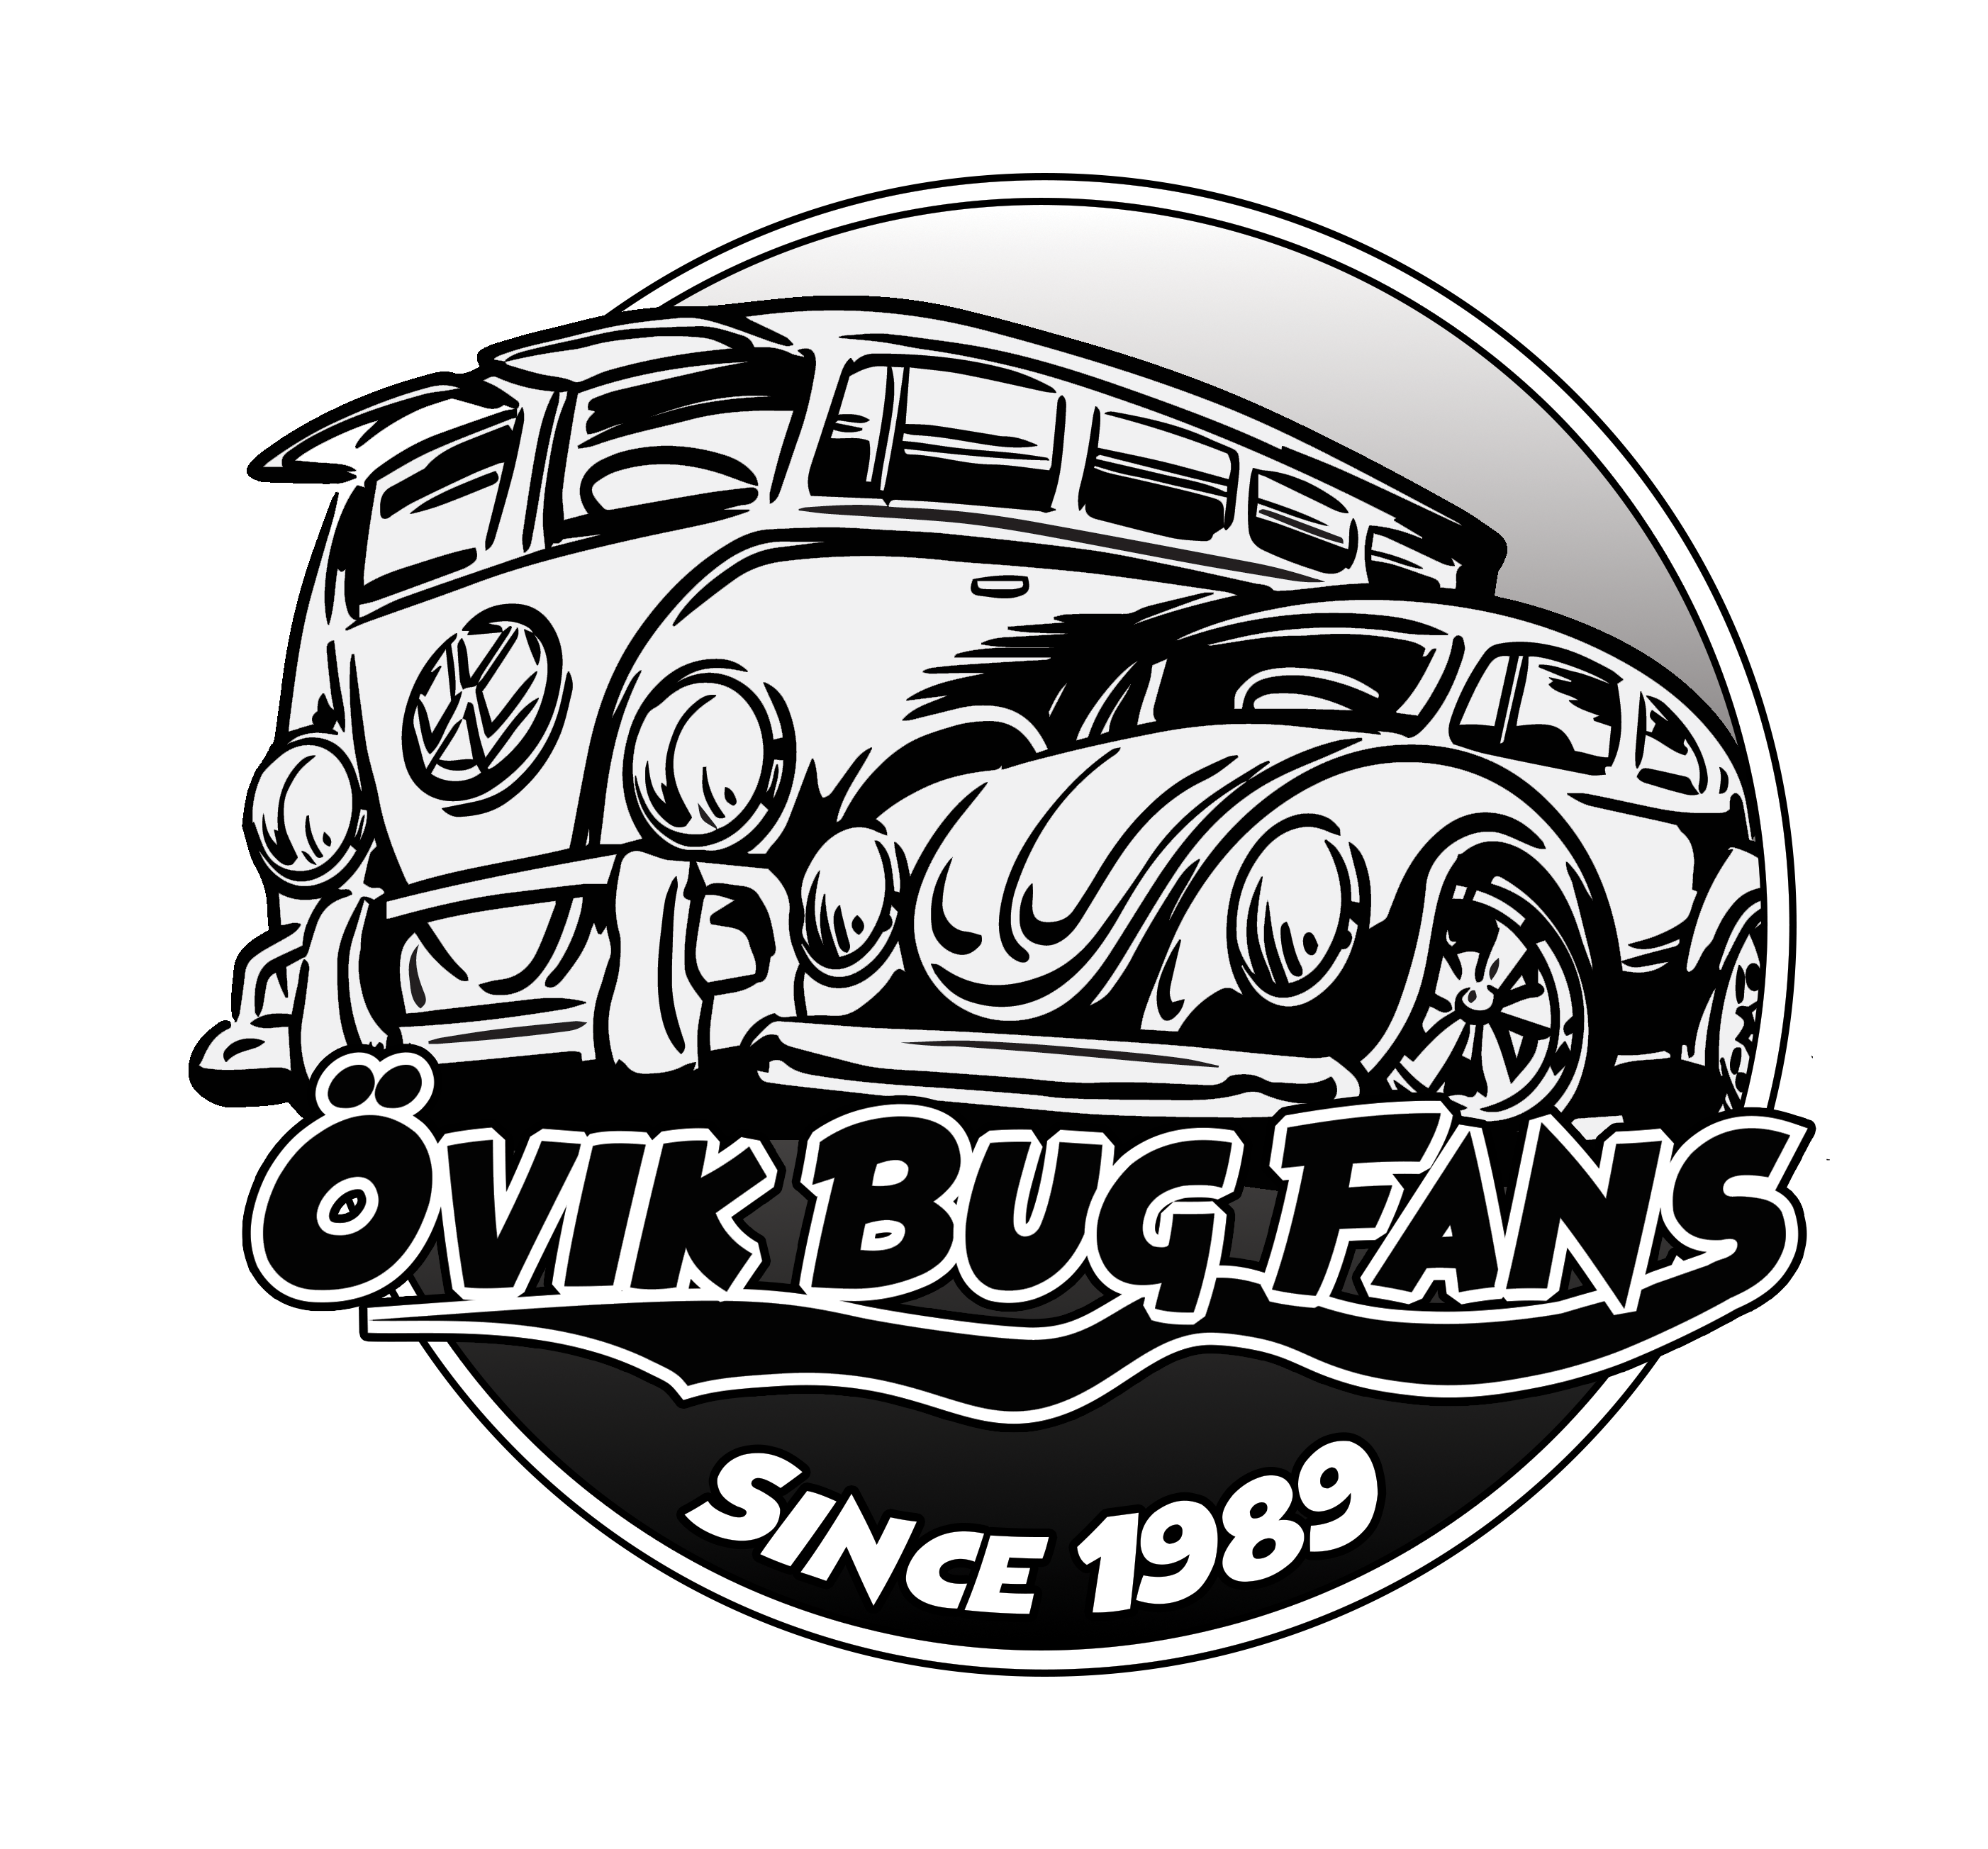 Övik Bug Fans – Since 1989